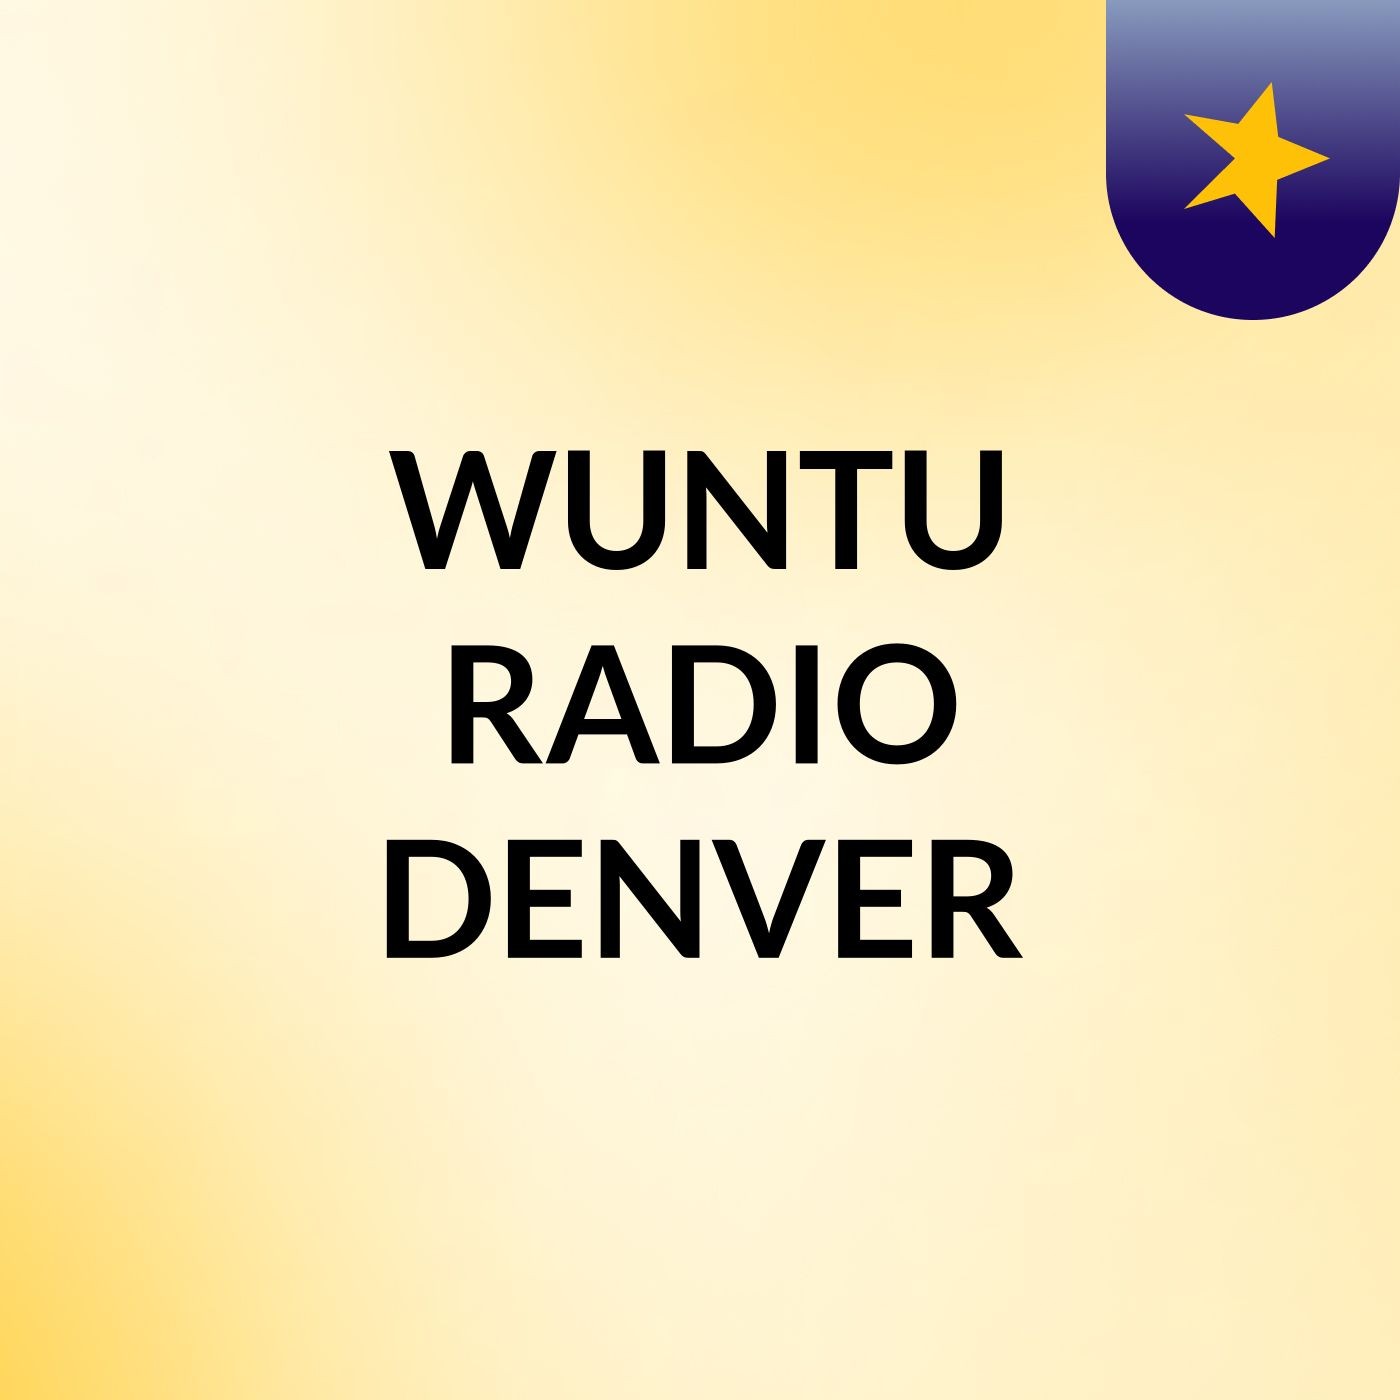 WUNTU RADIO DENVER